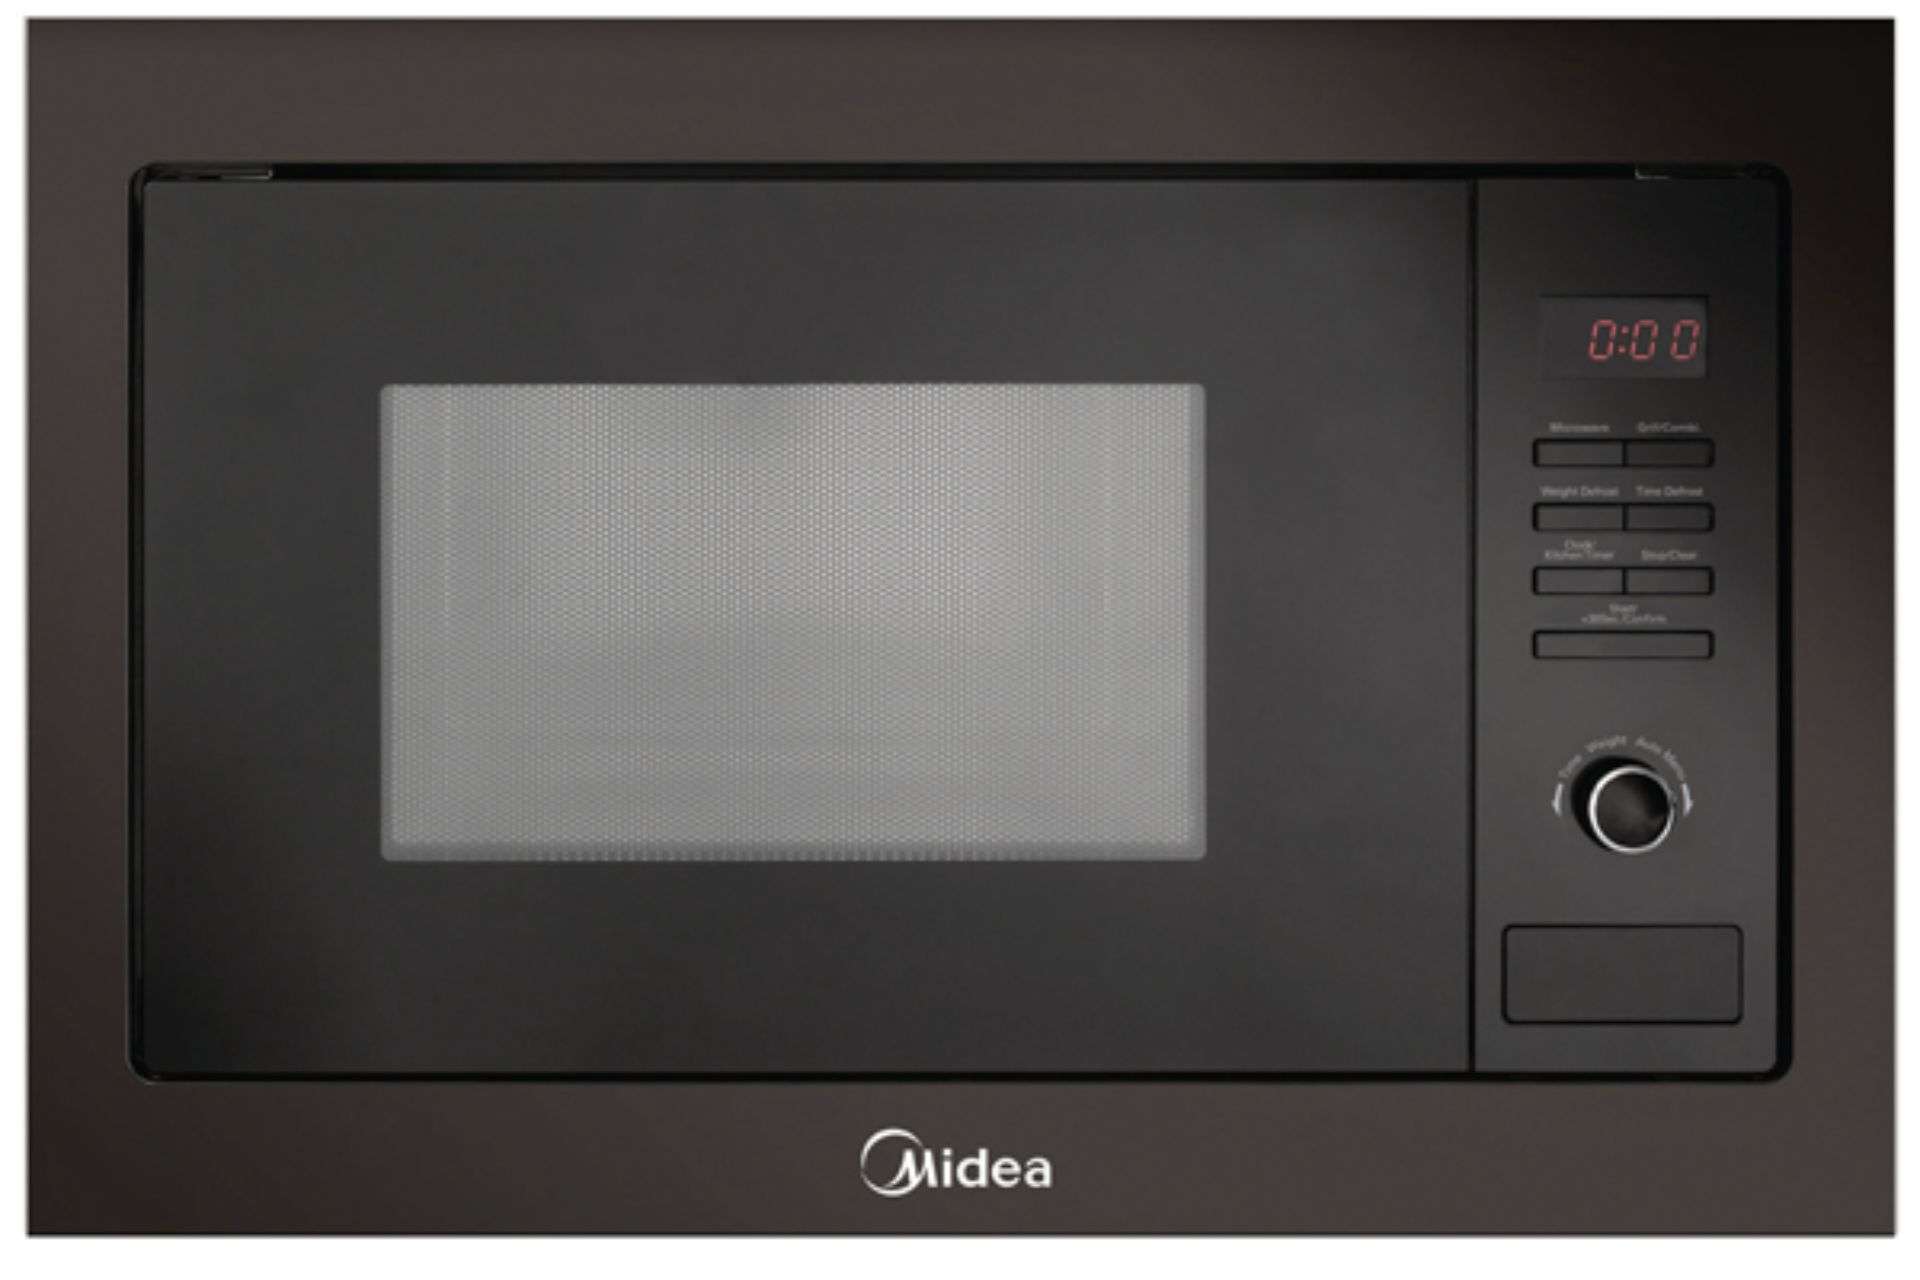 25L Built-In Microwave Oven 900W MBM-VE8925